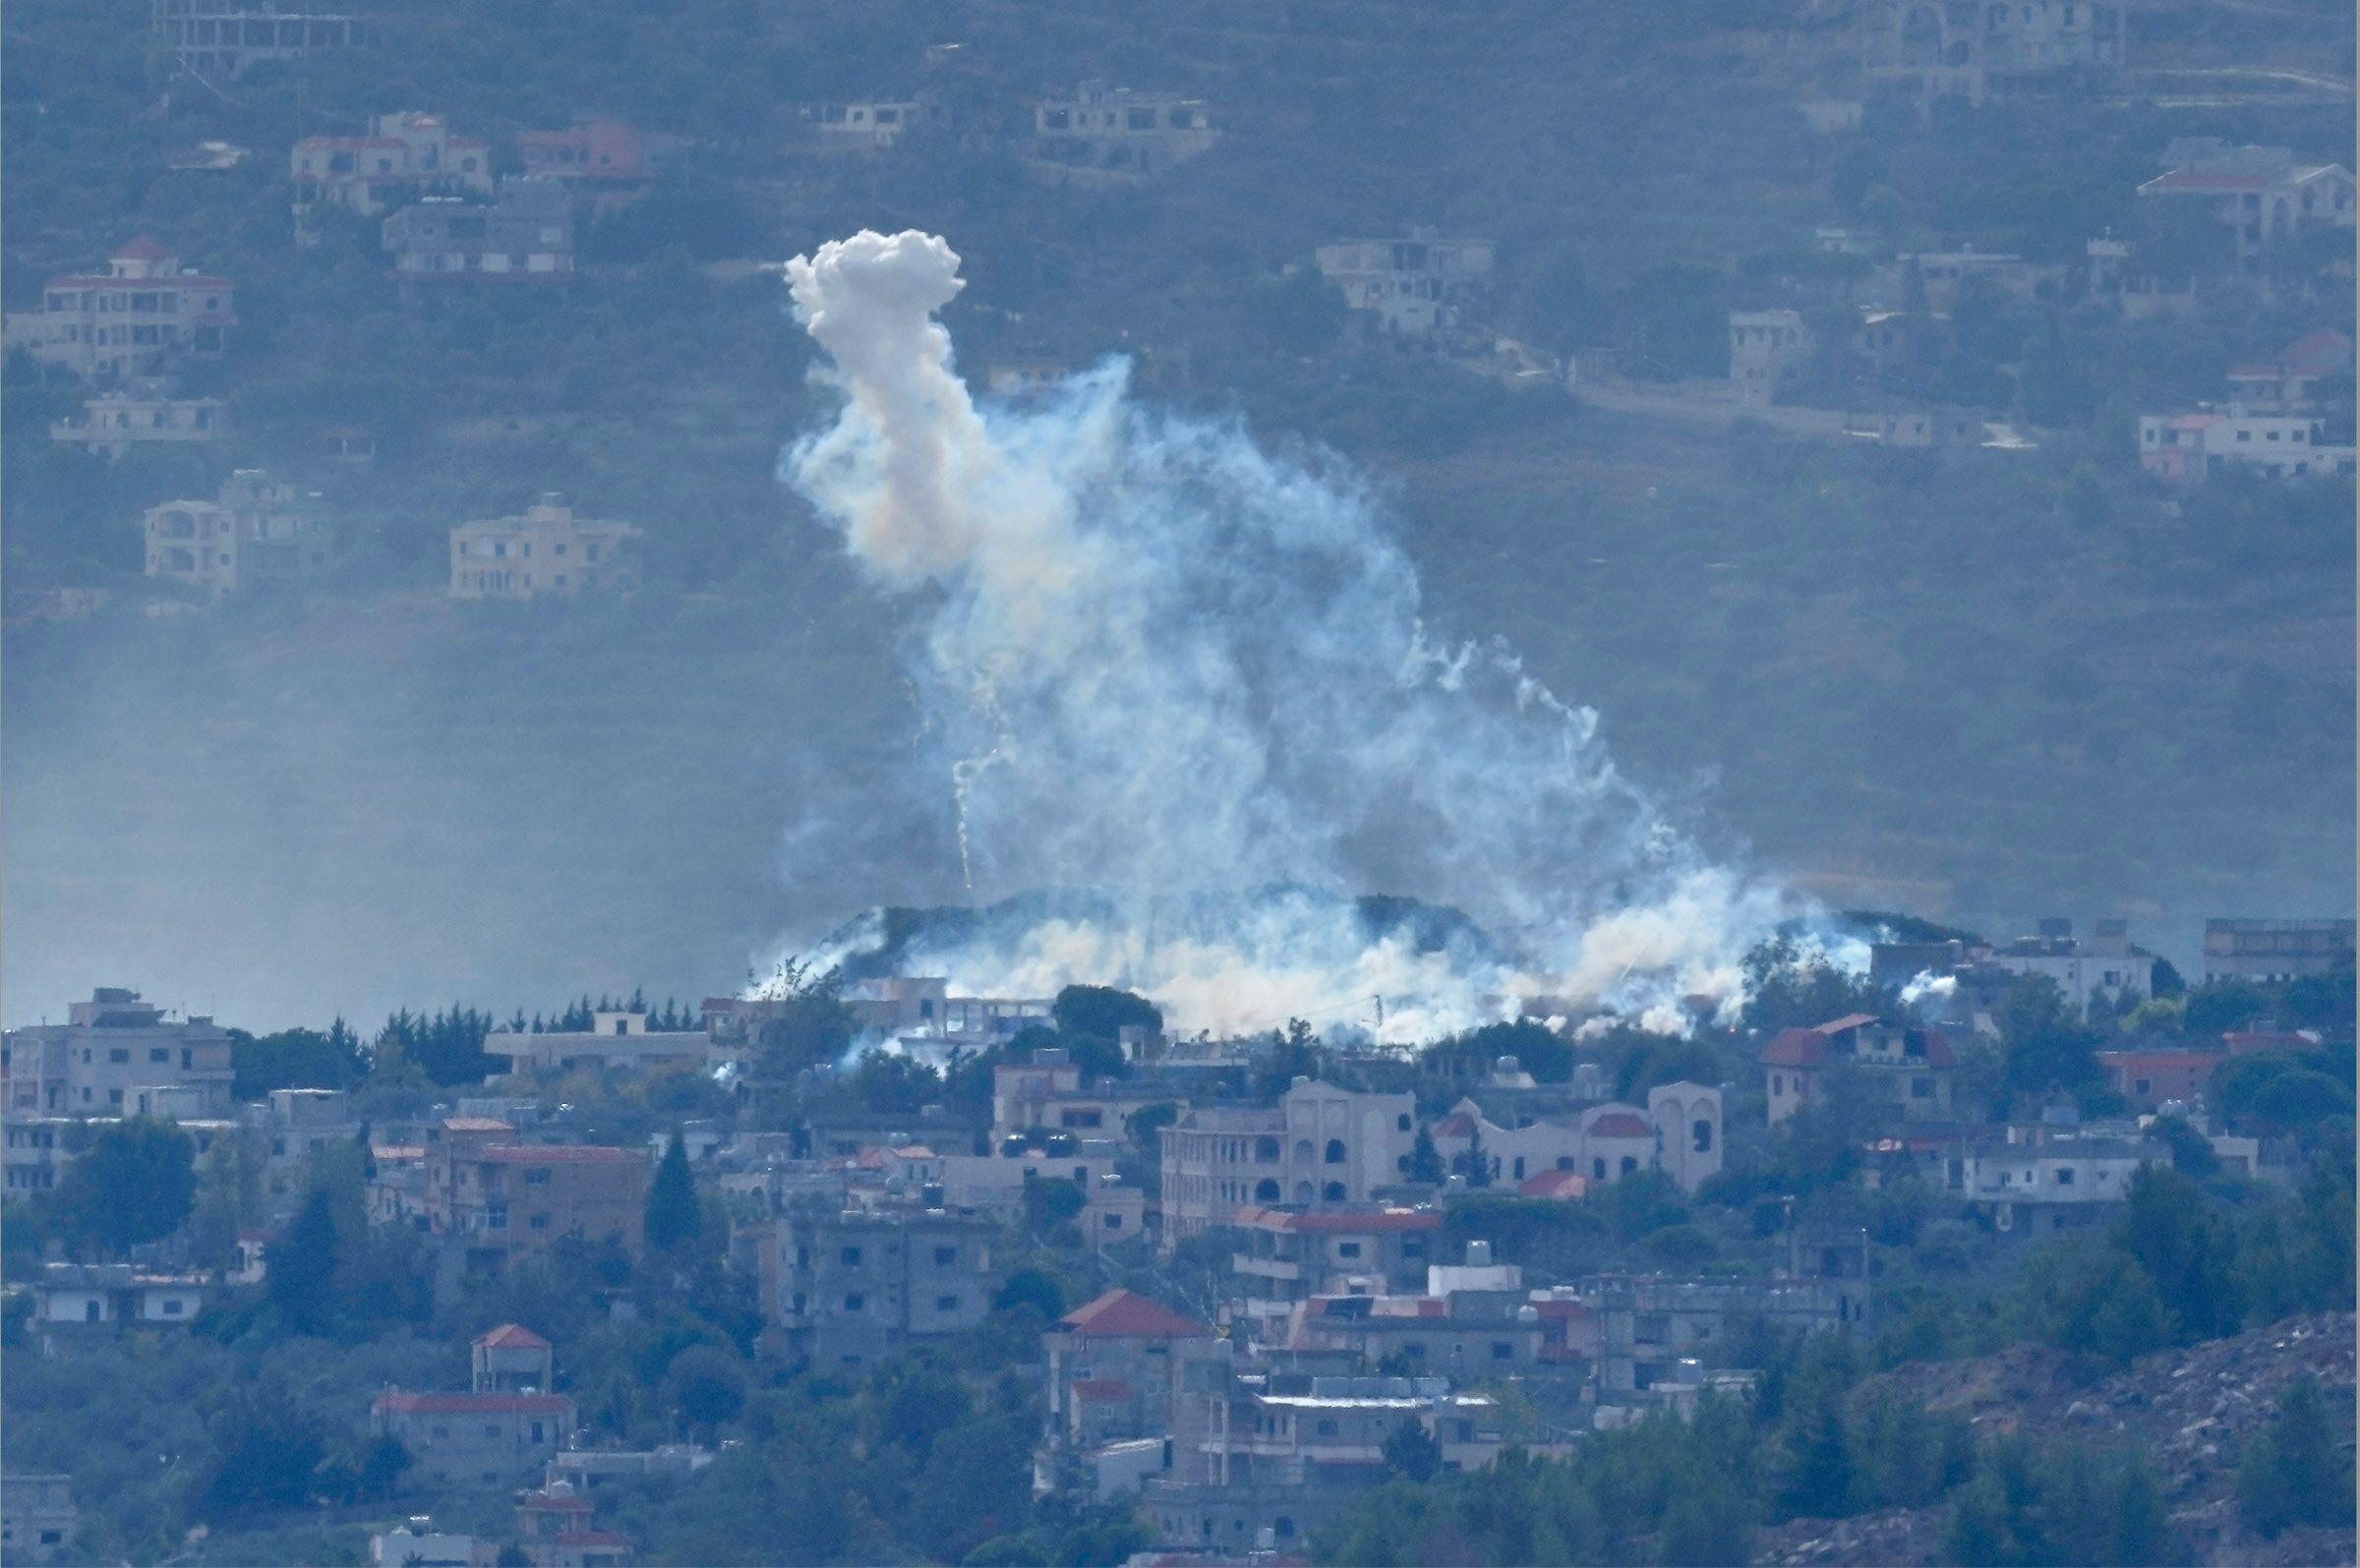 ataques de israel com fósforo branco no líbano violam leis internacionais?